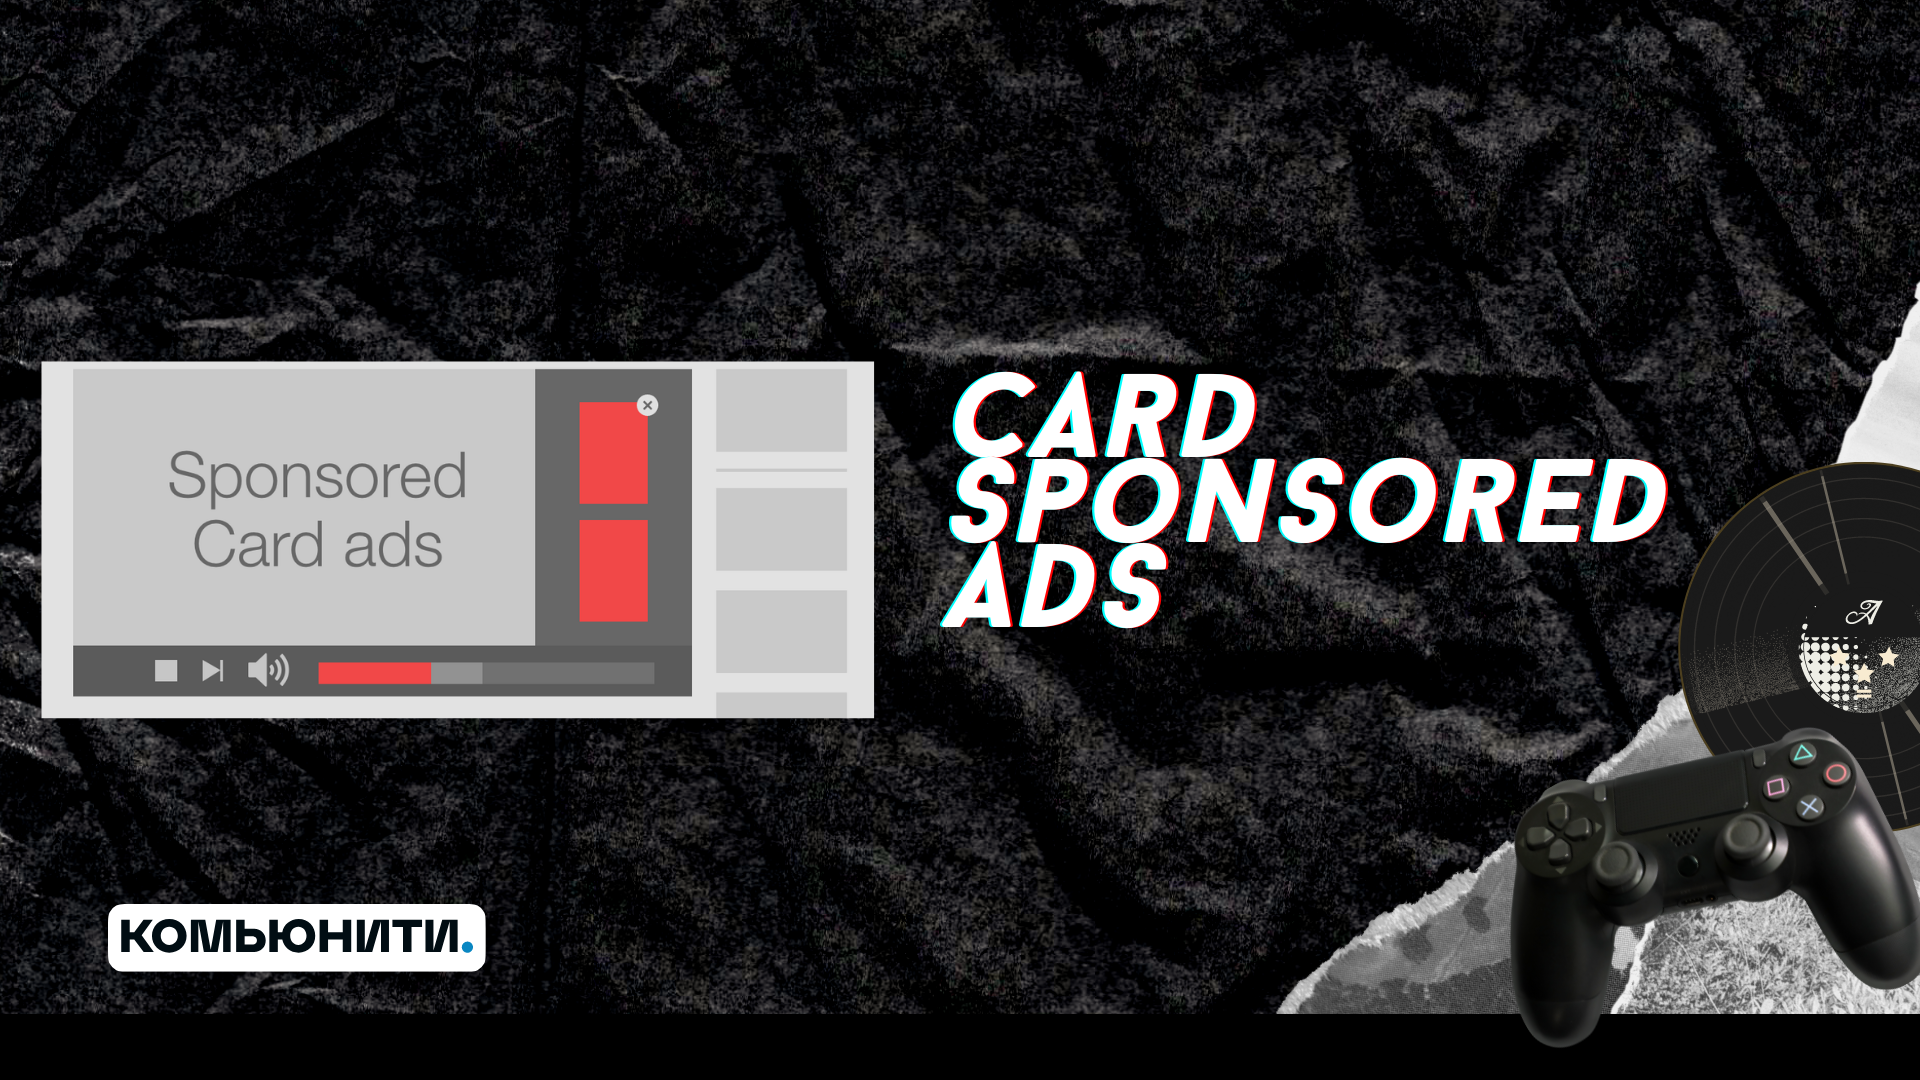 Card sponsored ads